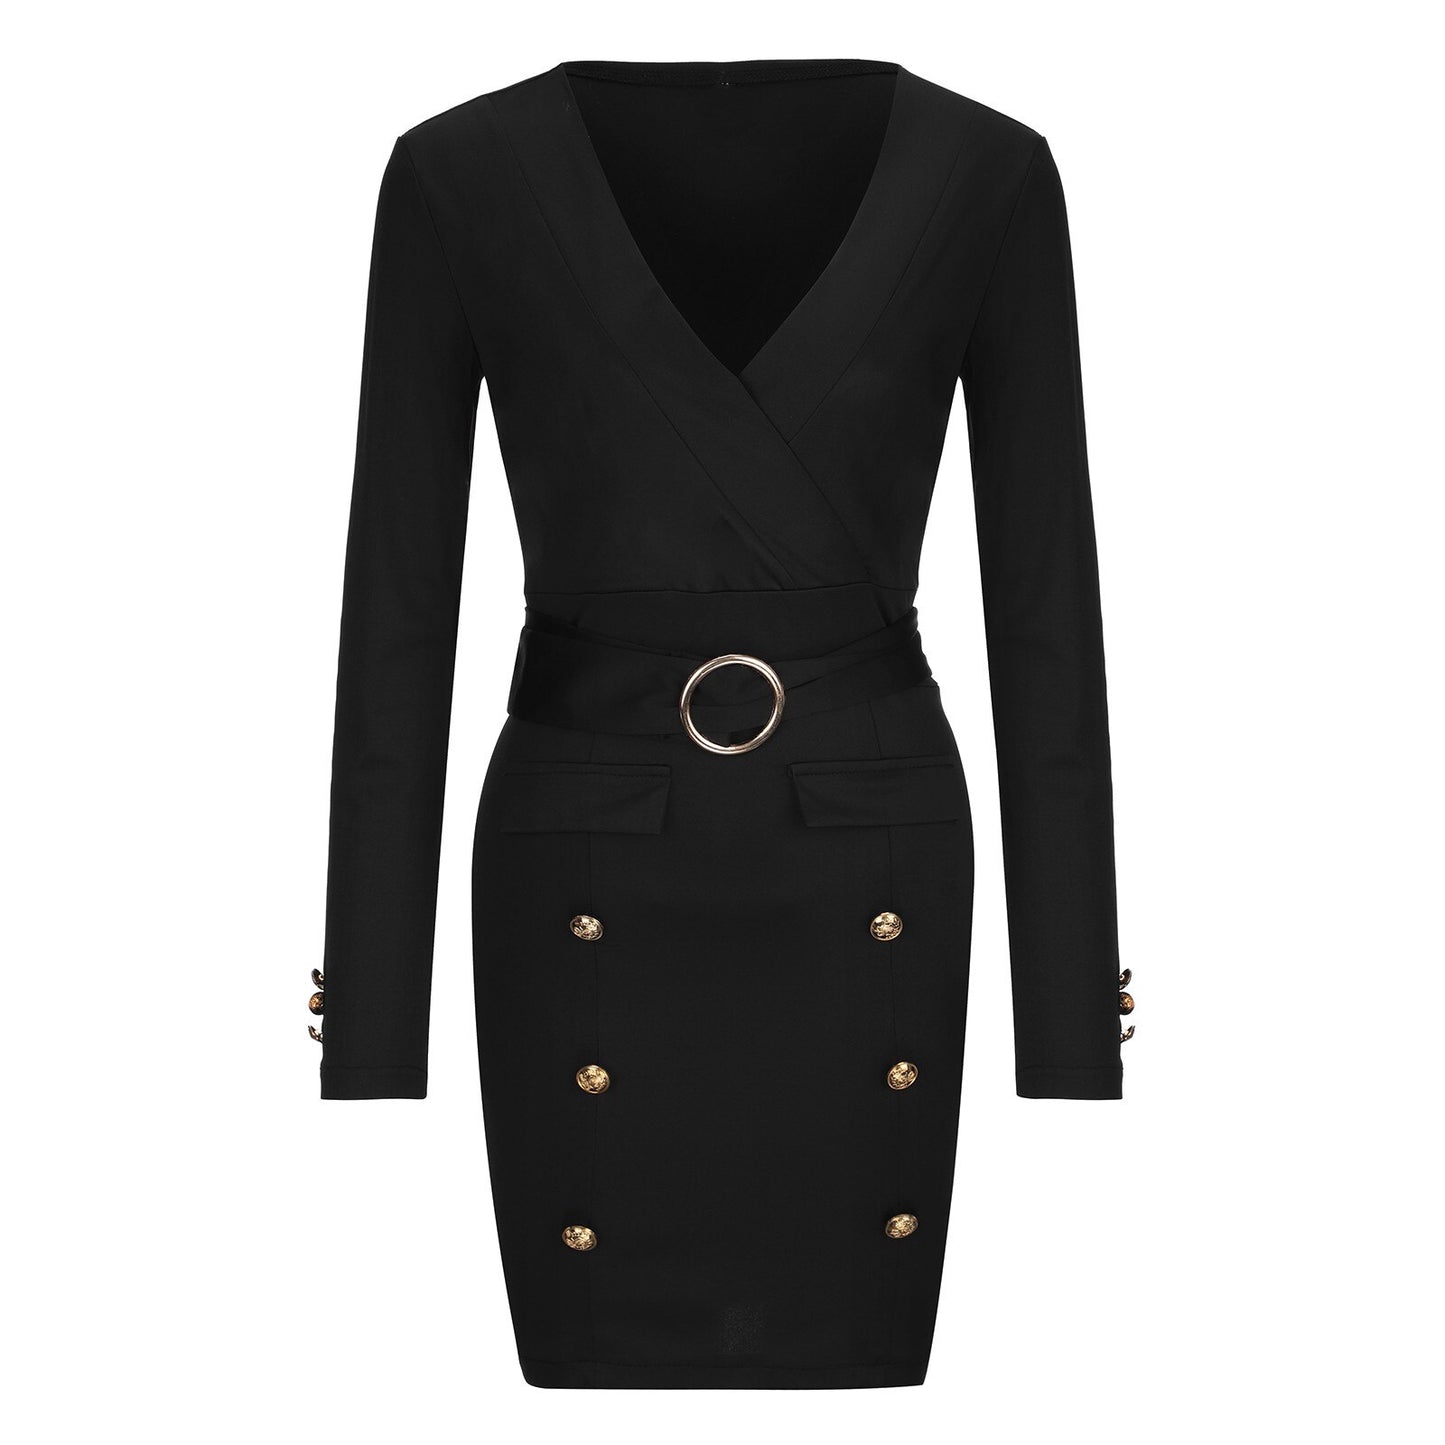 Fashion Sexy Double-Breasted Blazer Mini Dress Women 2021 Elegant Deep V-neck Wraped Bodycon Dress Black Belted Office Dresses